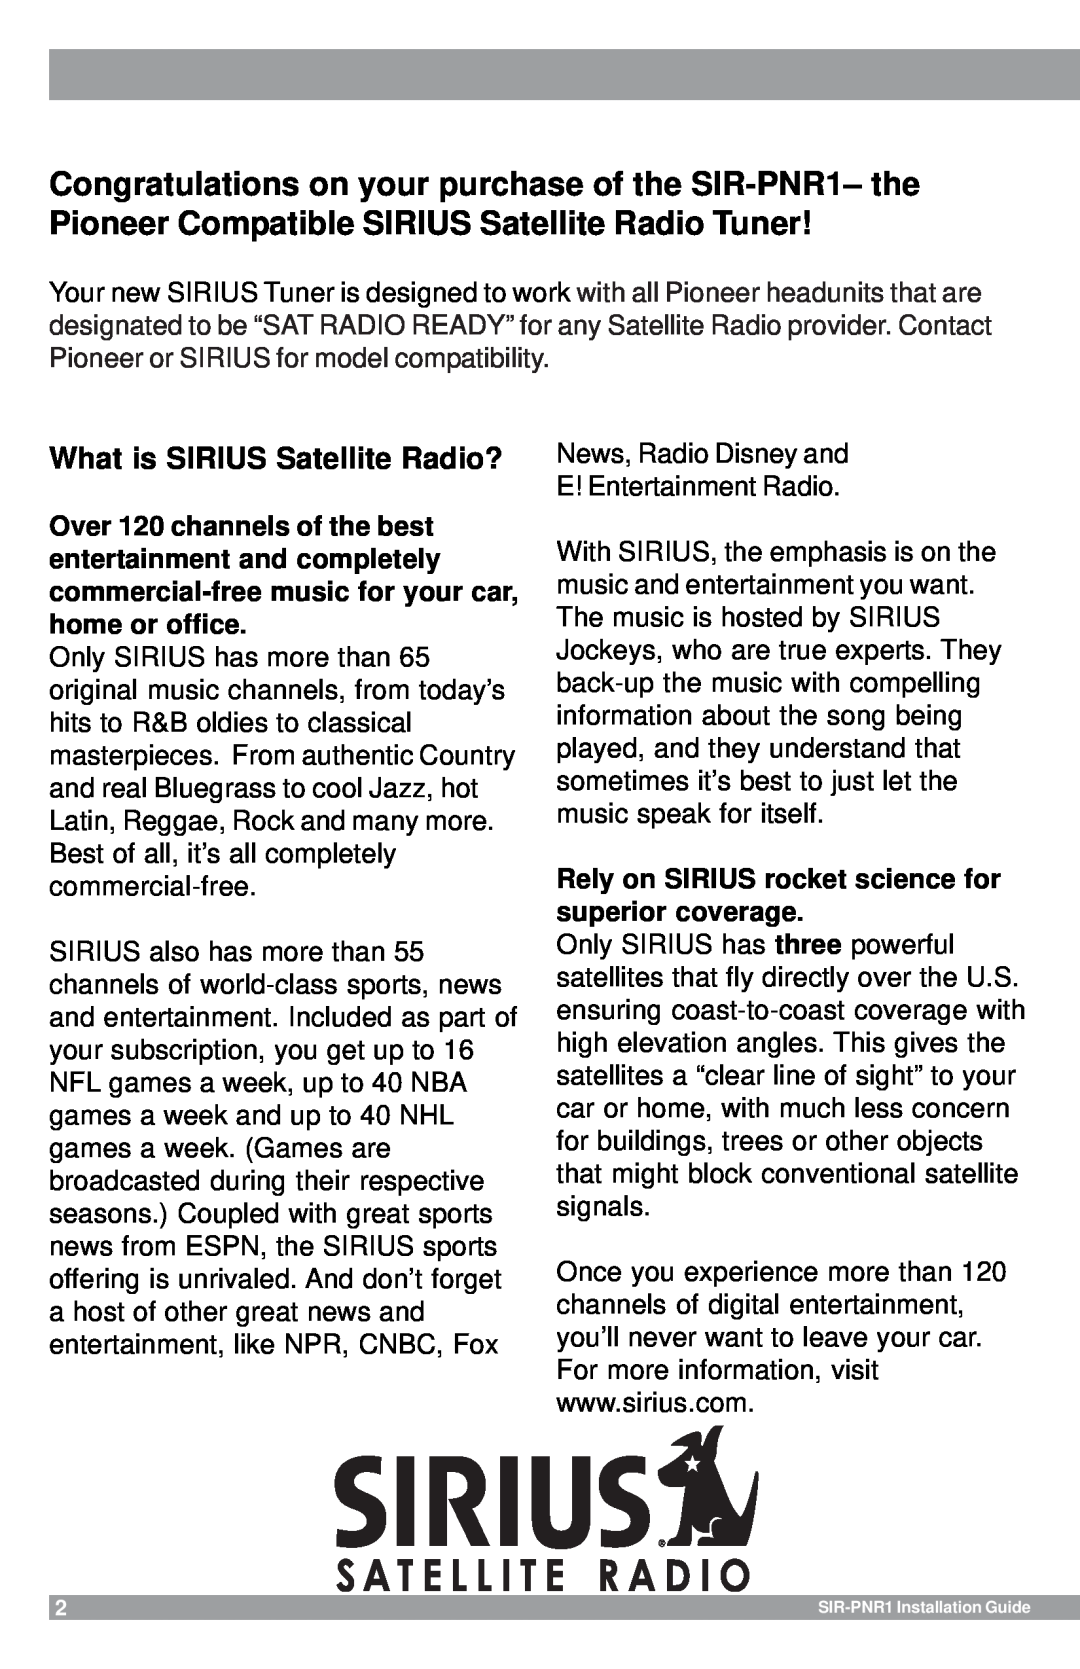 Sirius Satellite Radio SIR-PNR1 manual What is SIRIUS Satellite Radio? 